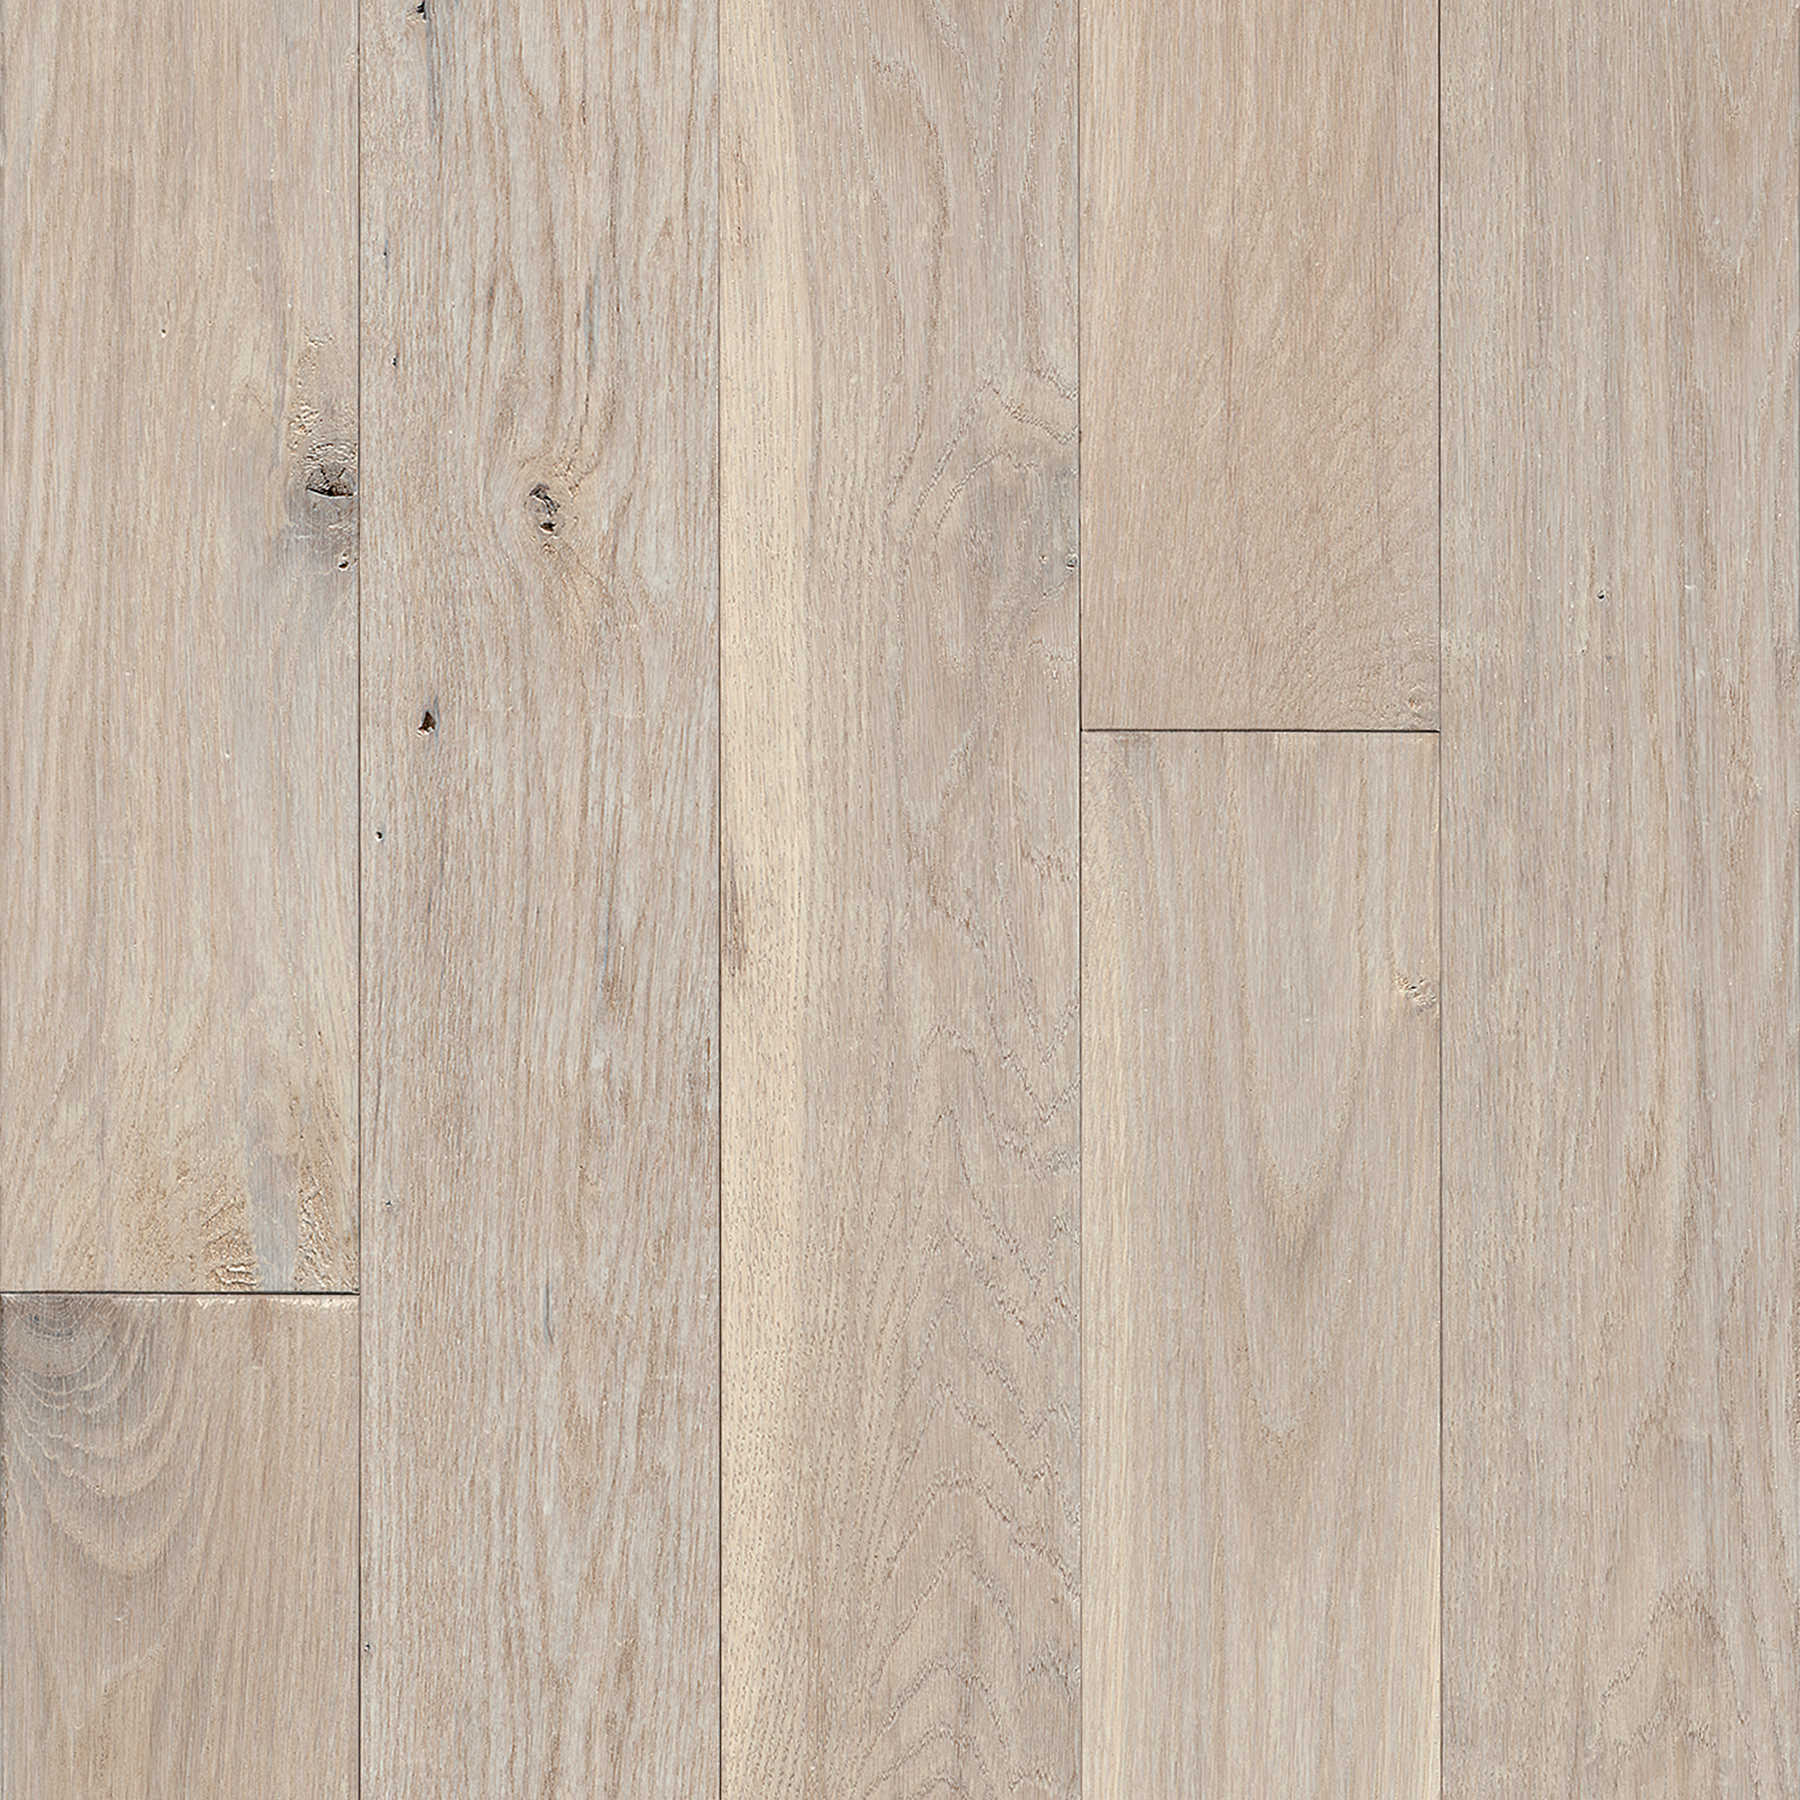 Oak Solid Hardwood Sbkss59l401h, Bruce Hardwood Floor Fresh Finish